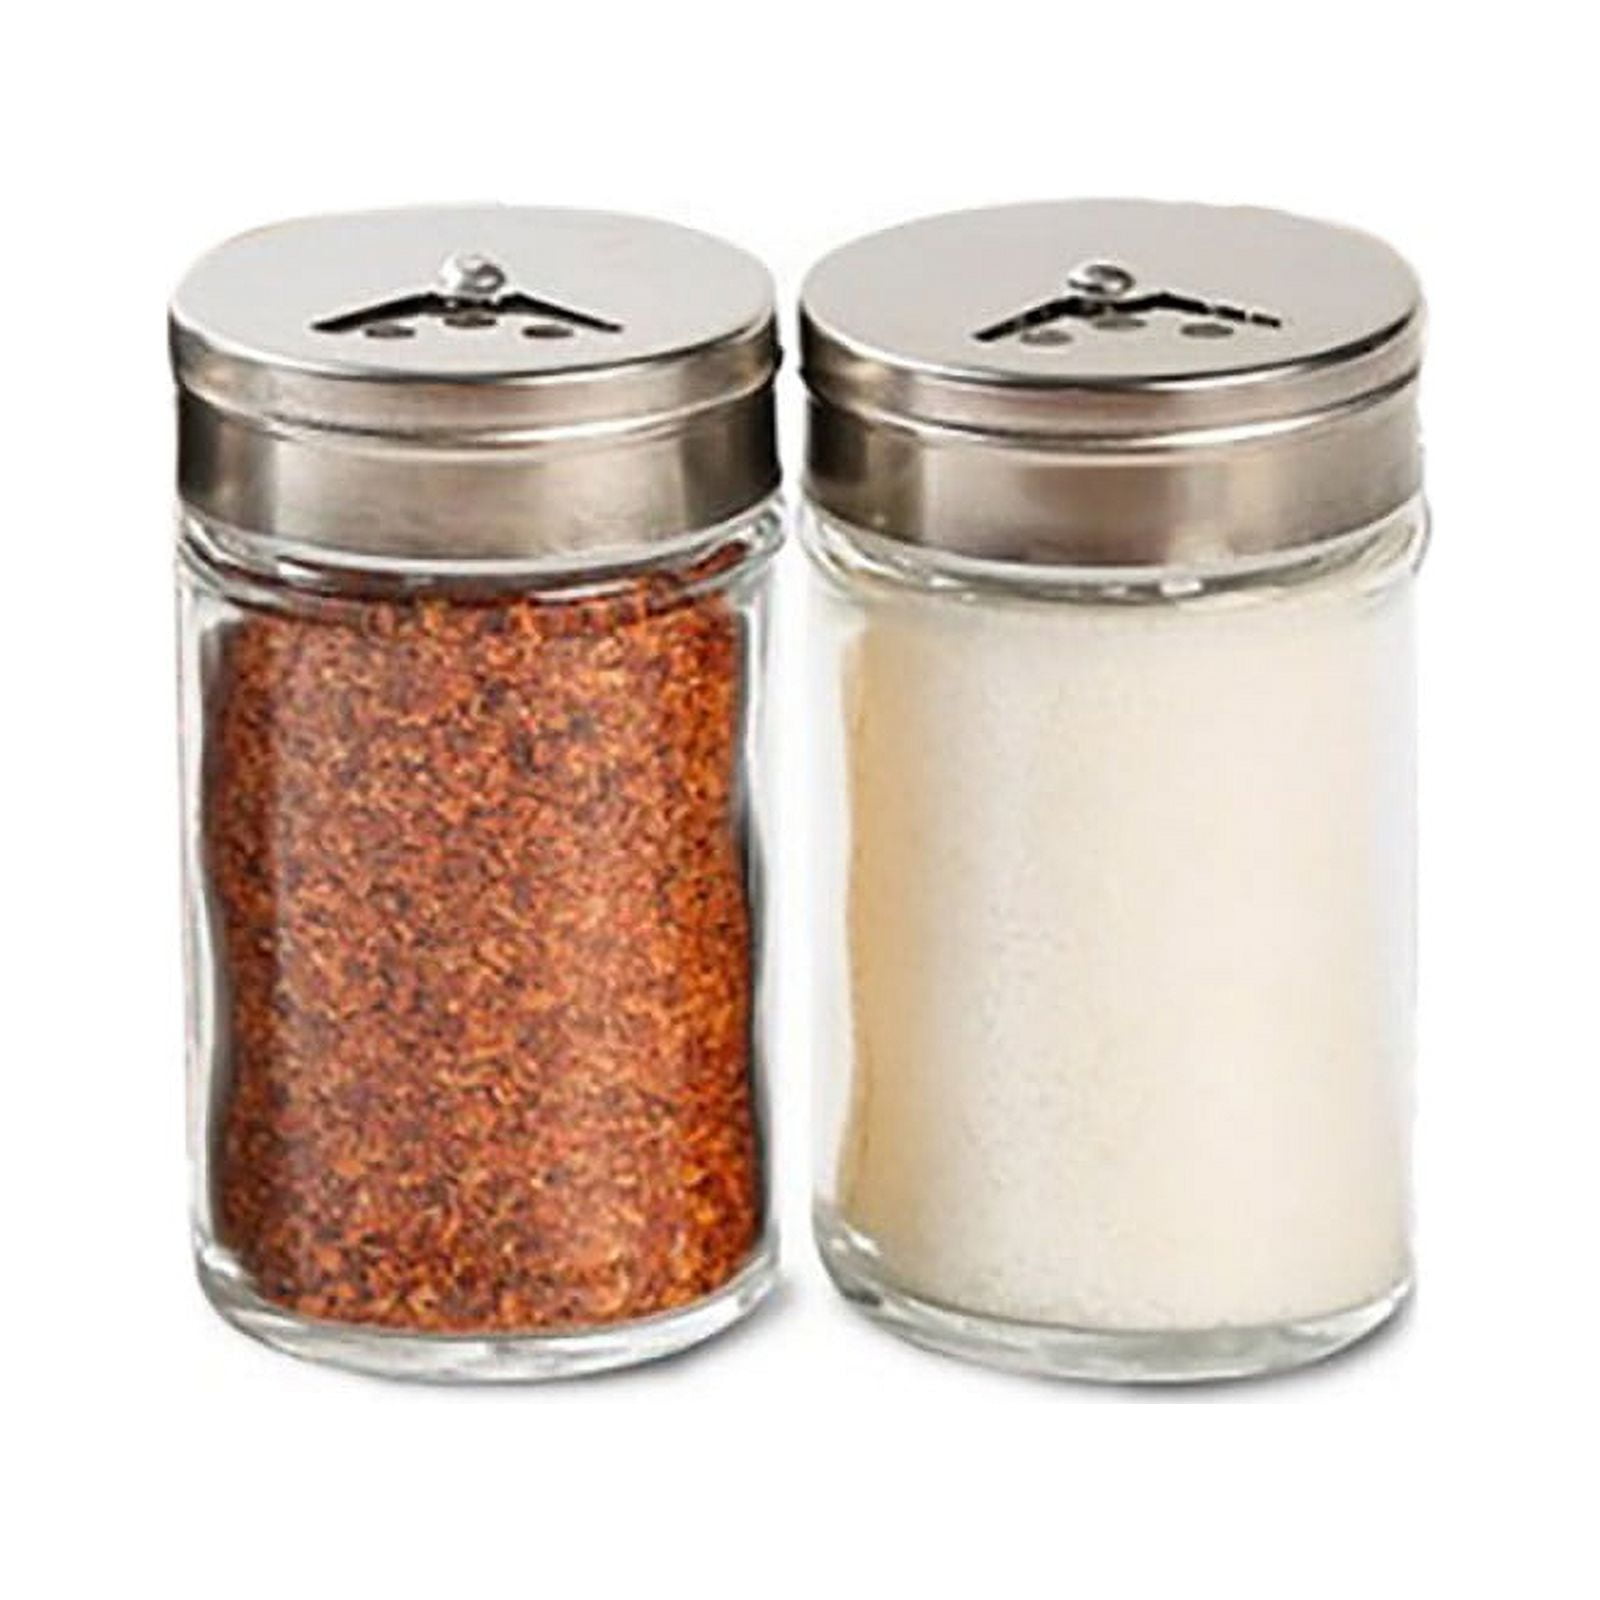 2.7 oz. Glass Spice Jar with Shaker Lid